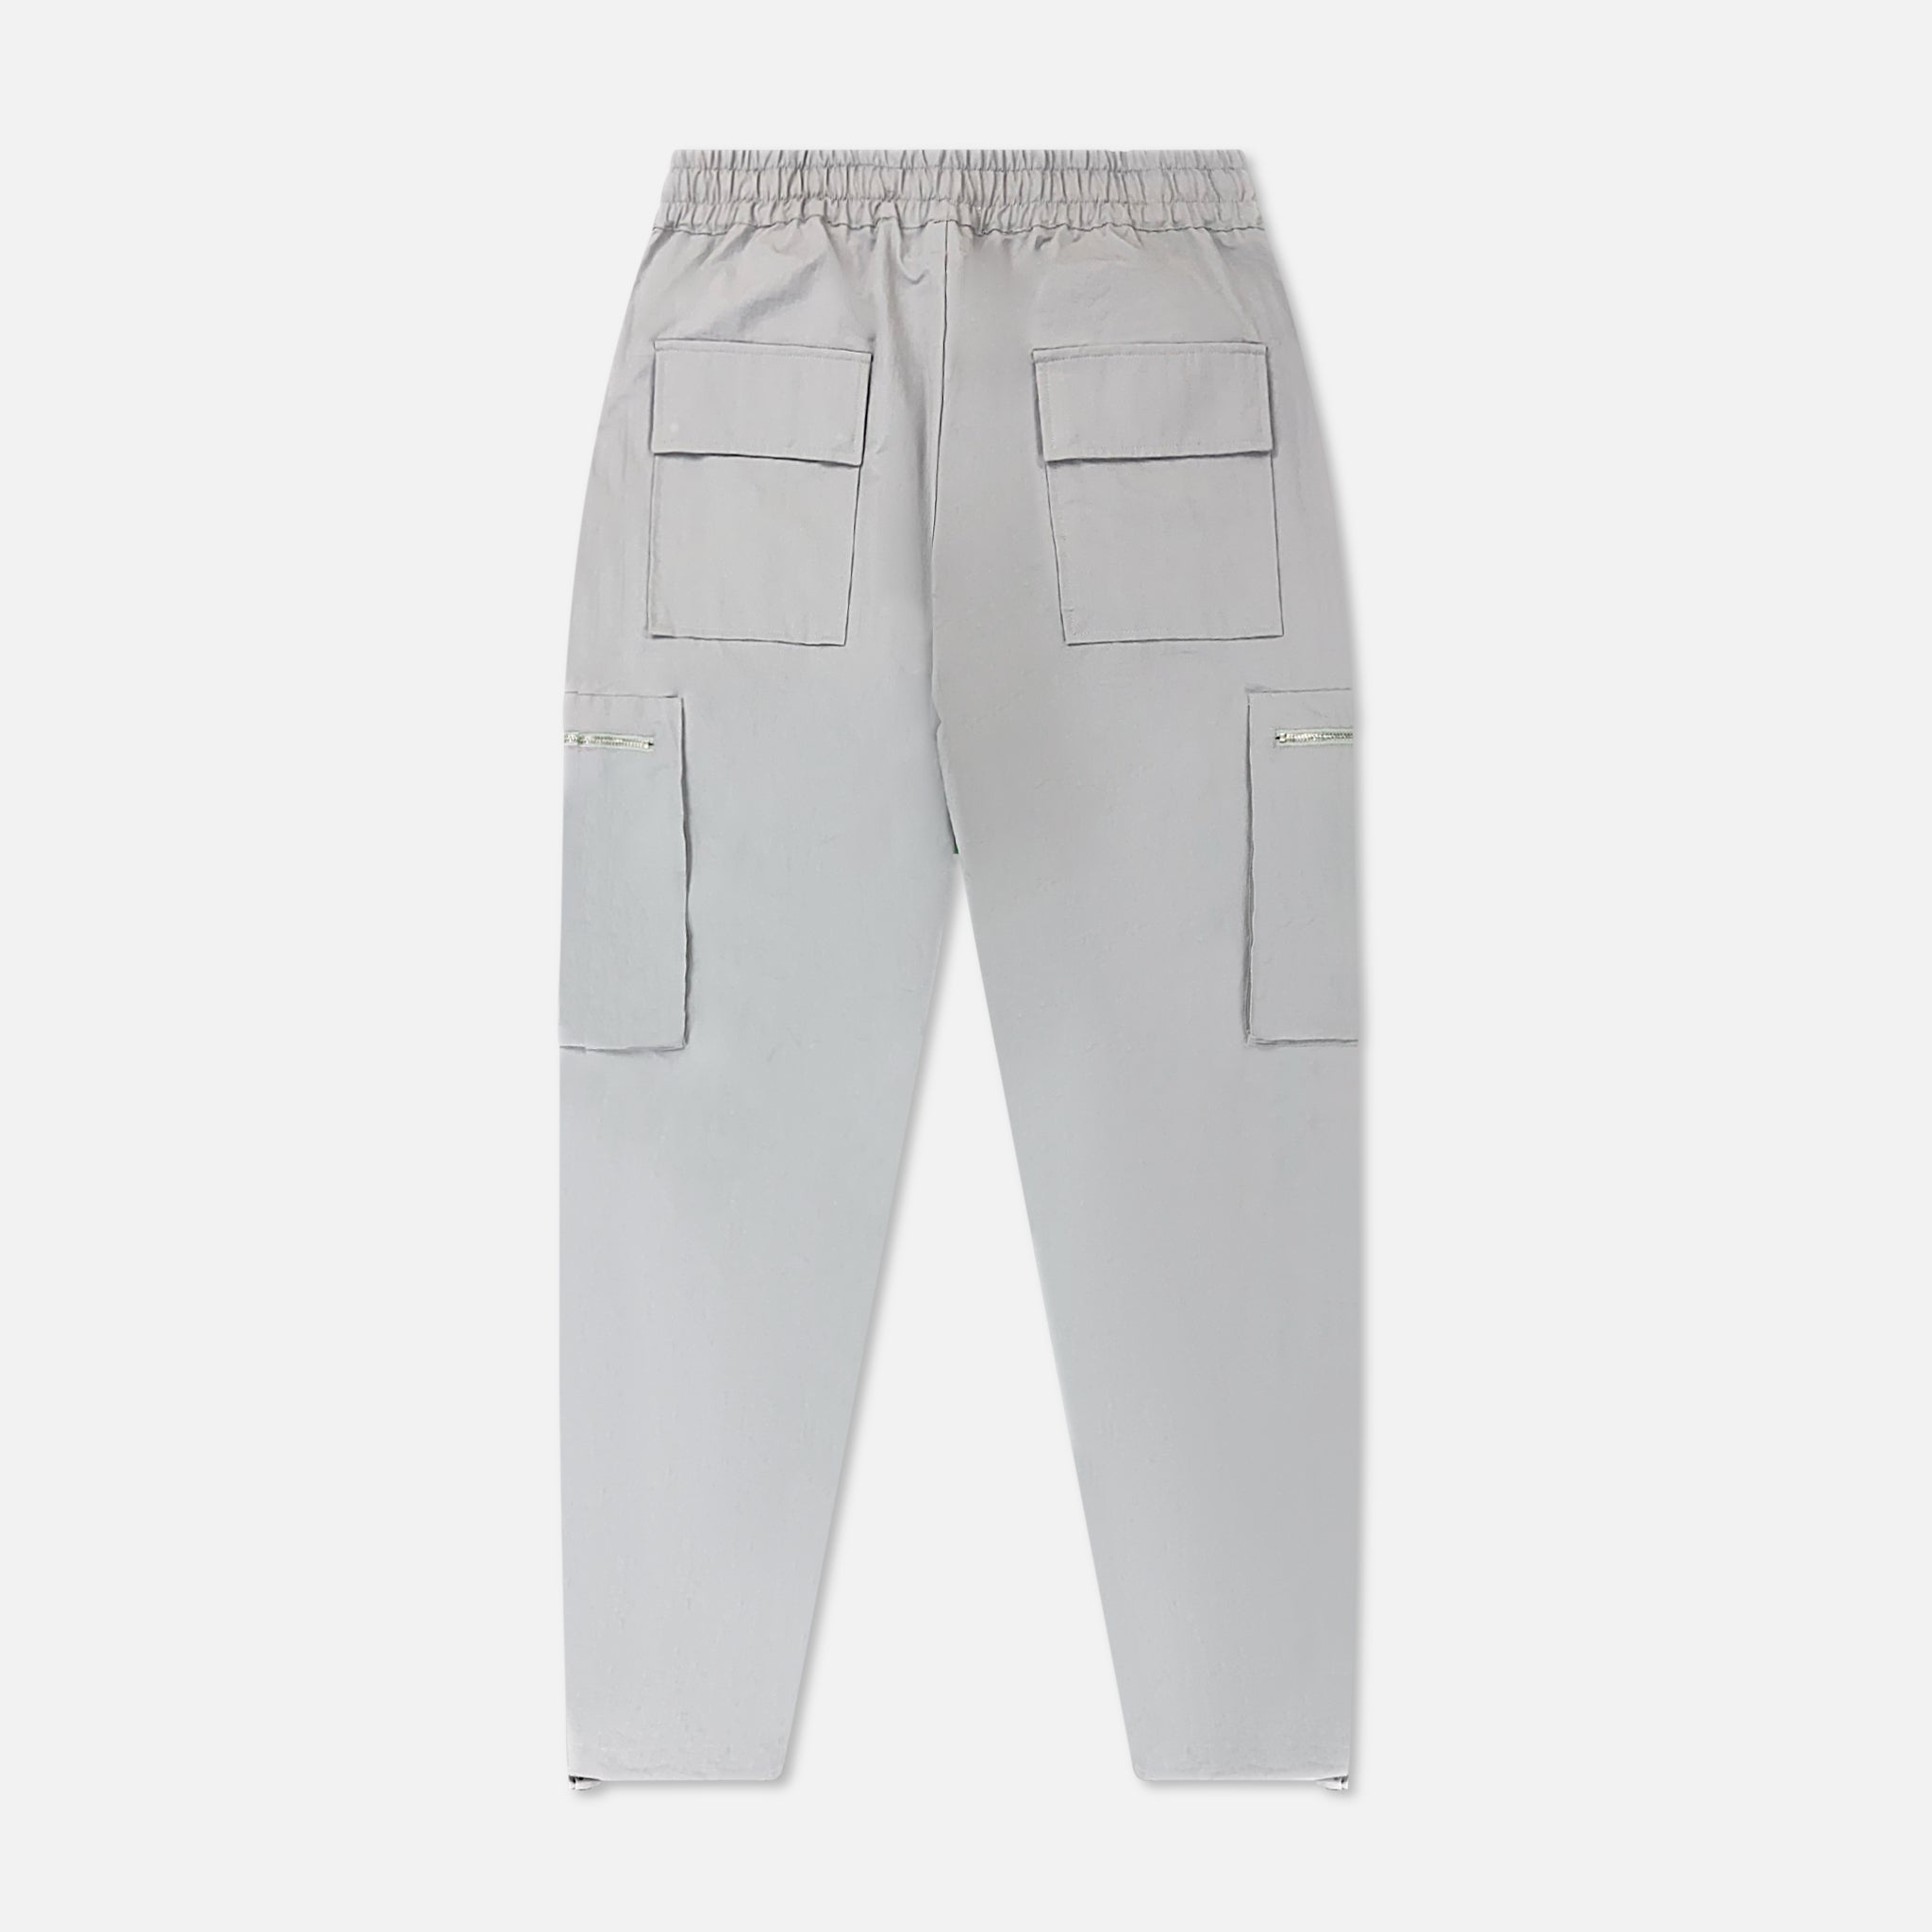 Nylon Cargo Gray Pants - Pathos Of Things